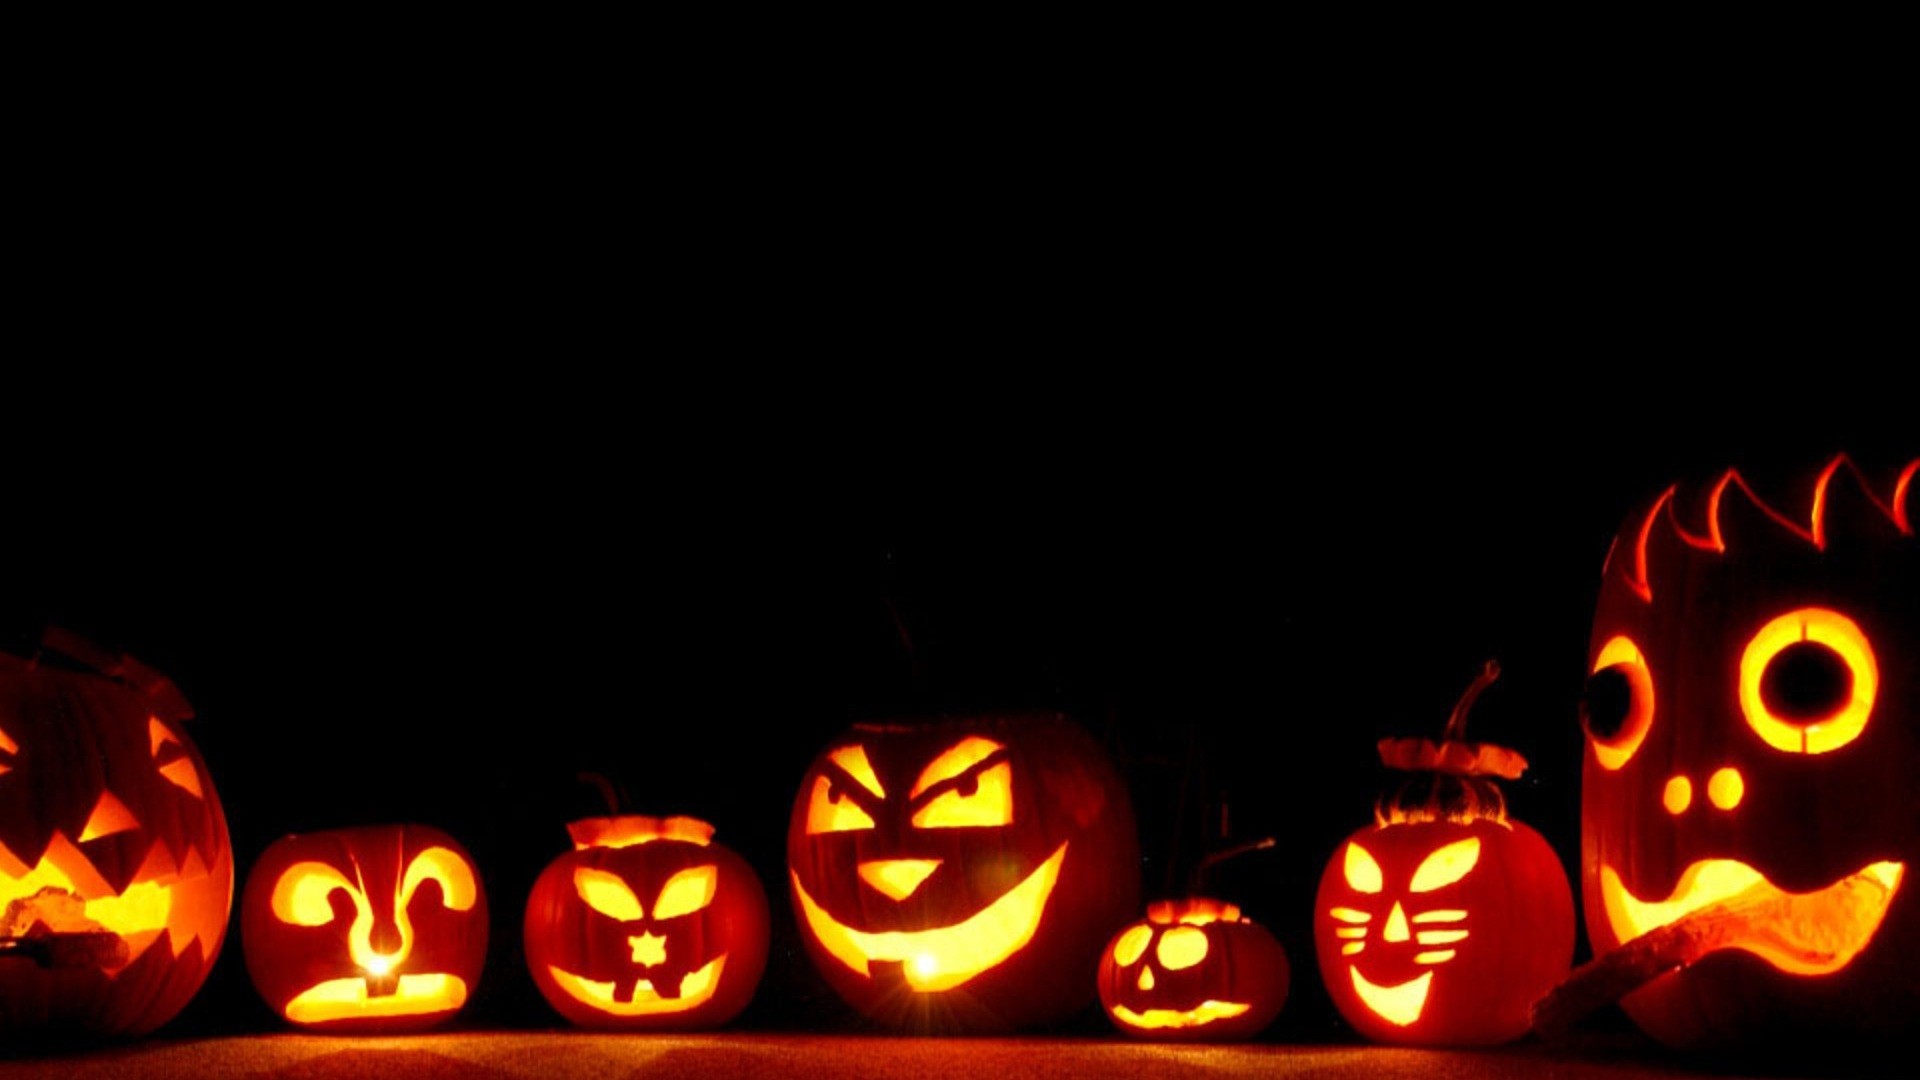 General 1920x1080 Halloween simple background lights spooky pumpkin